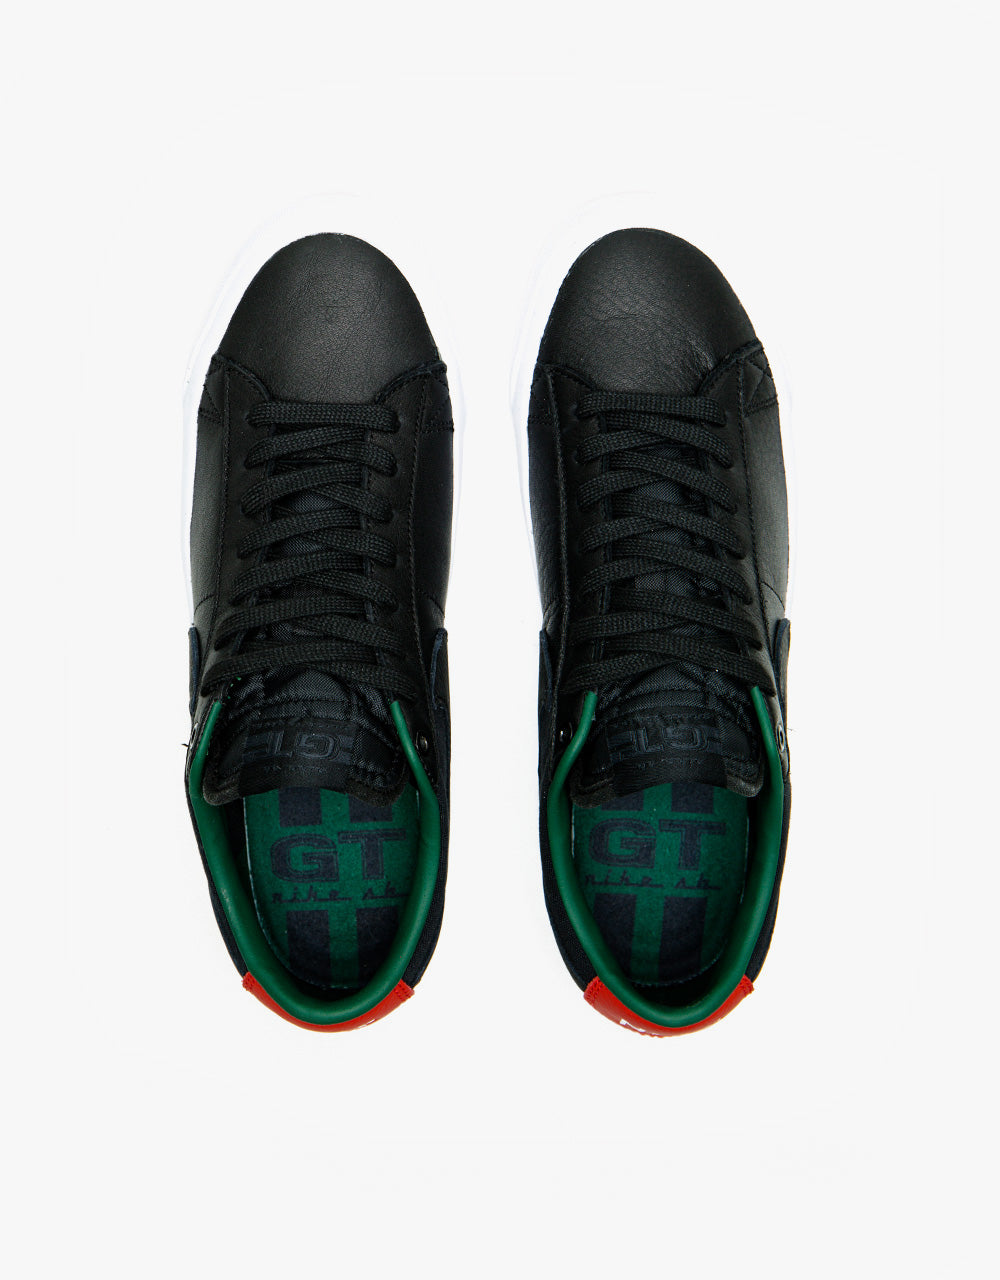 Nike SB Zoom Blazer Low Pro GT Premium Skate Shoes - Black/Black-Varsity Red-Fir